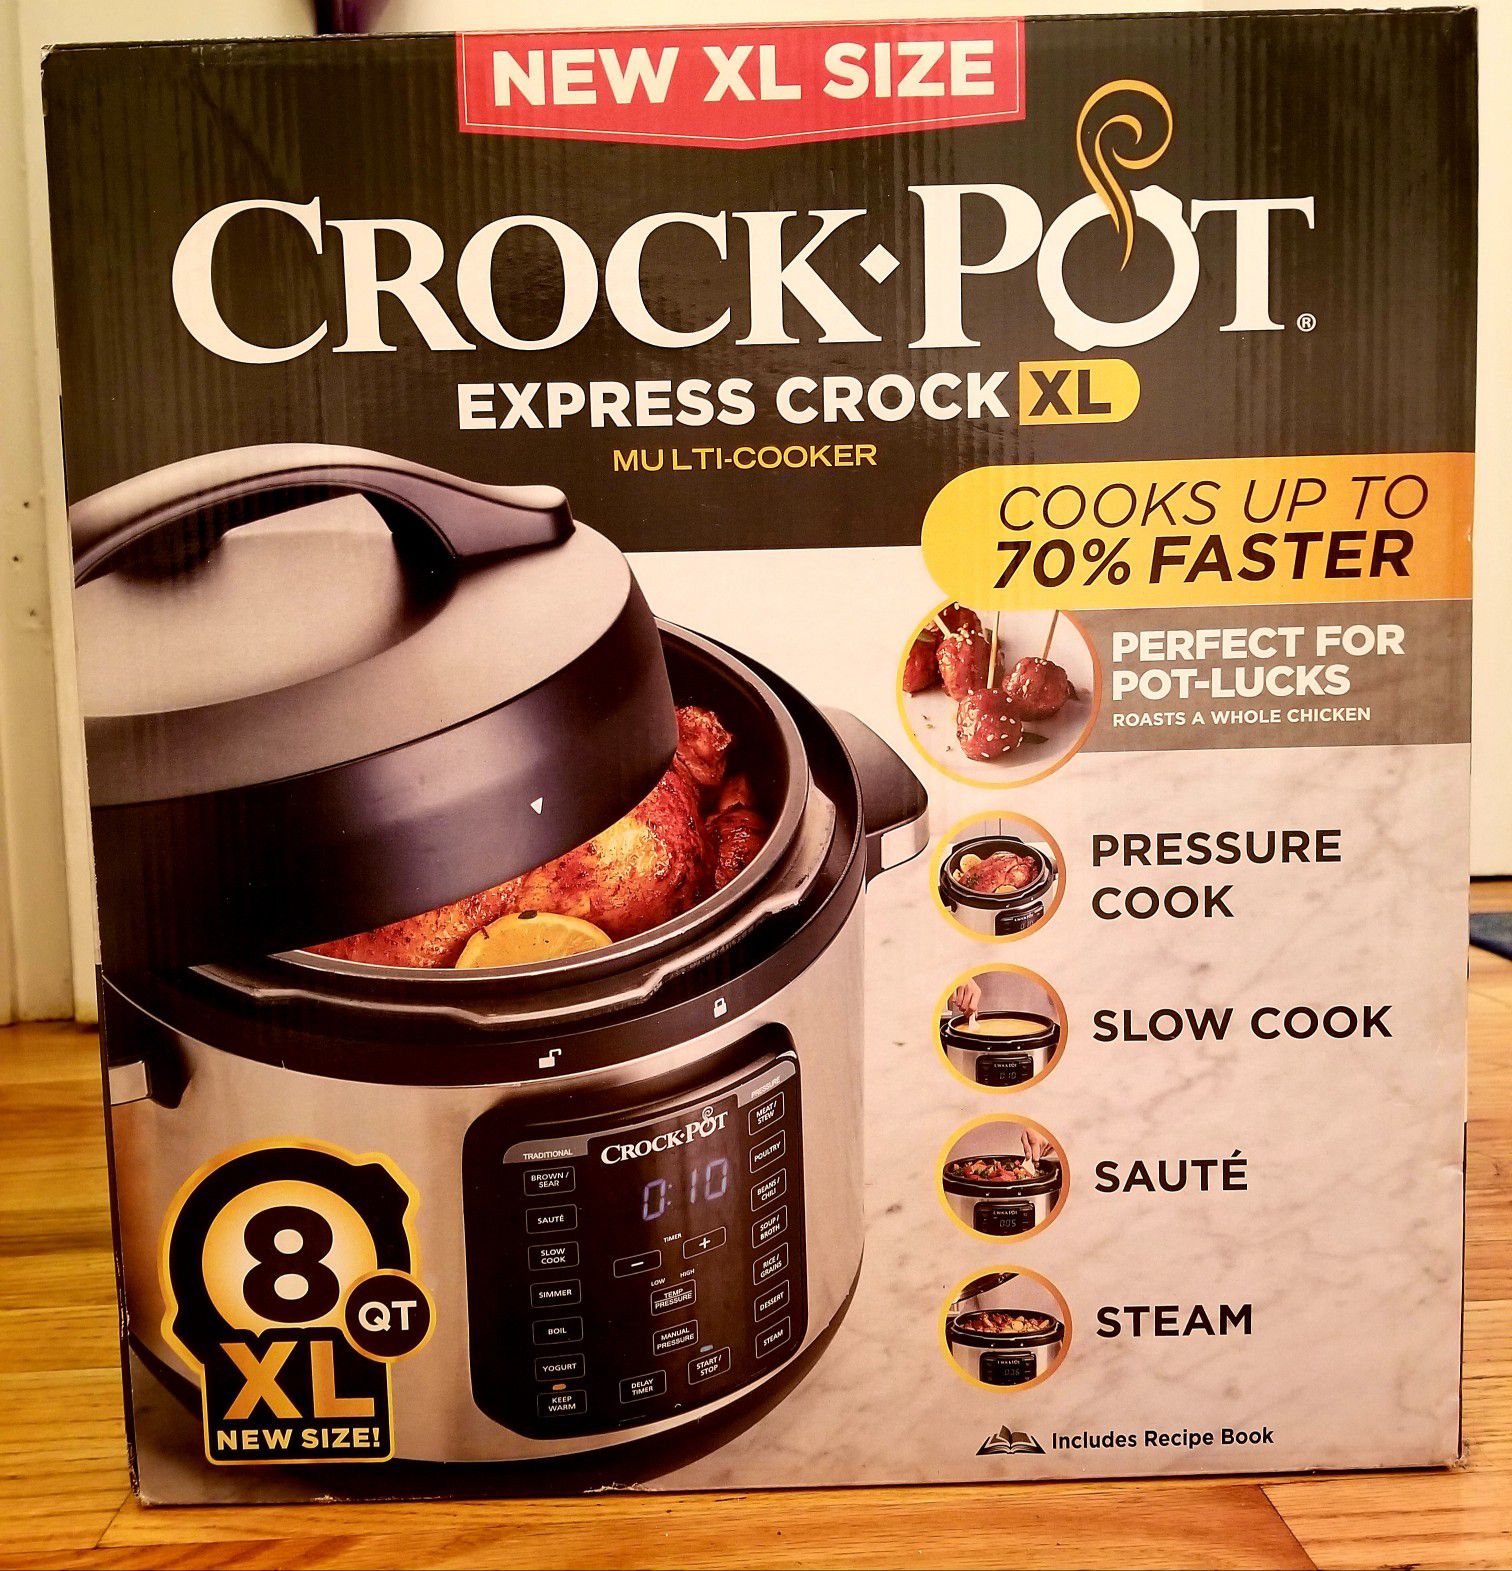 Crock pot XL express